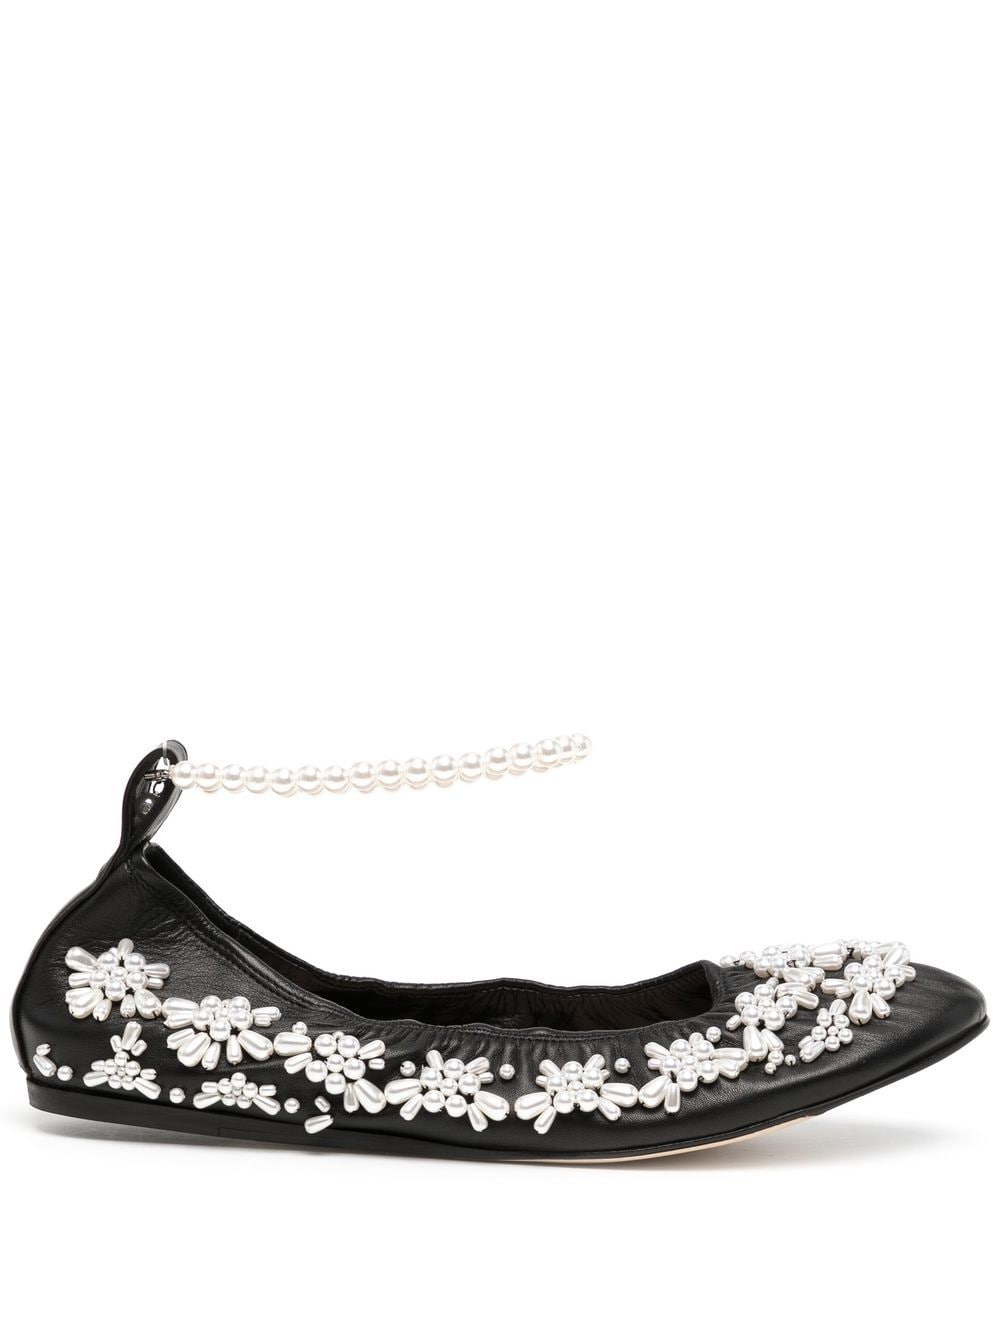 Simone Rocha pearl-embellished ballerina shoes